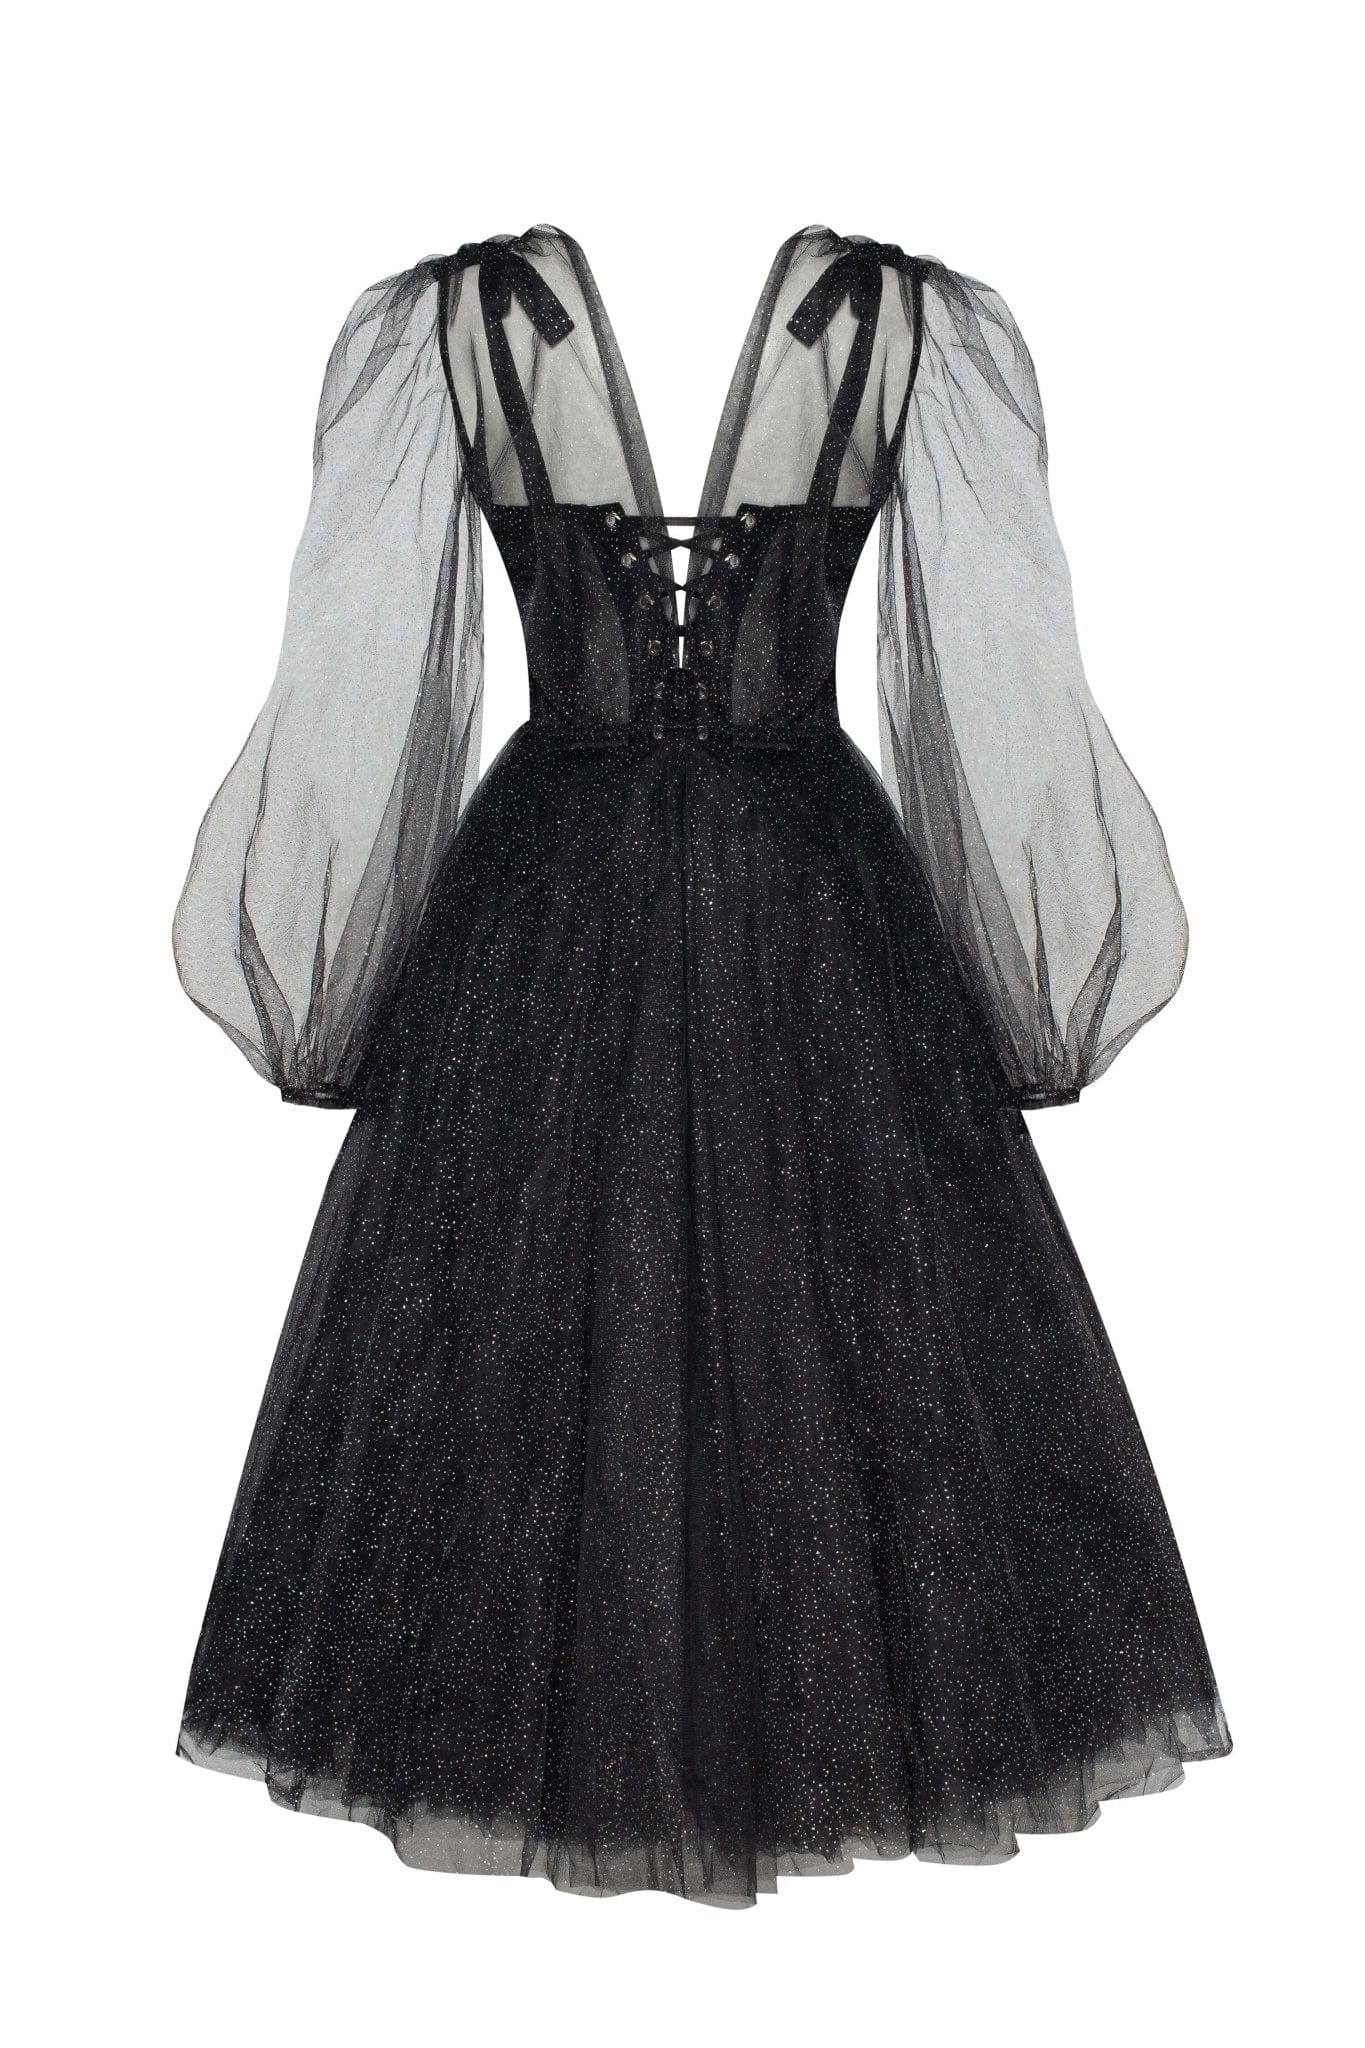 Black Tulle Dress, Sheer Party Dress, Tulle Cocktail Dress, Villanelle  Dress, See Through Black Dress, Avant Garde Clothing -  Canada